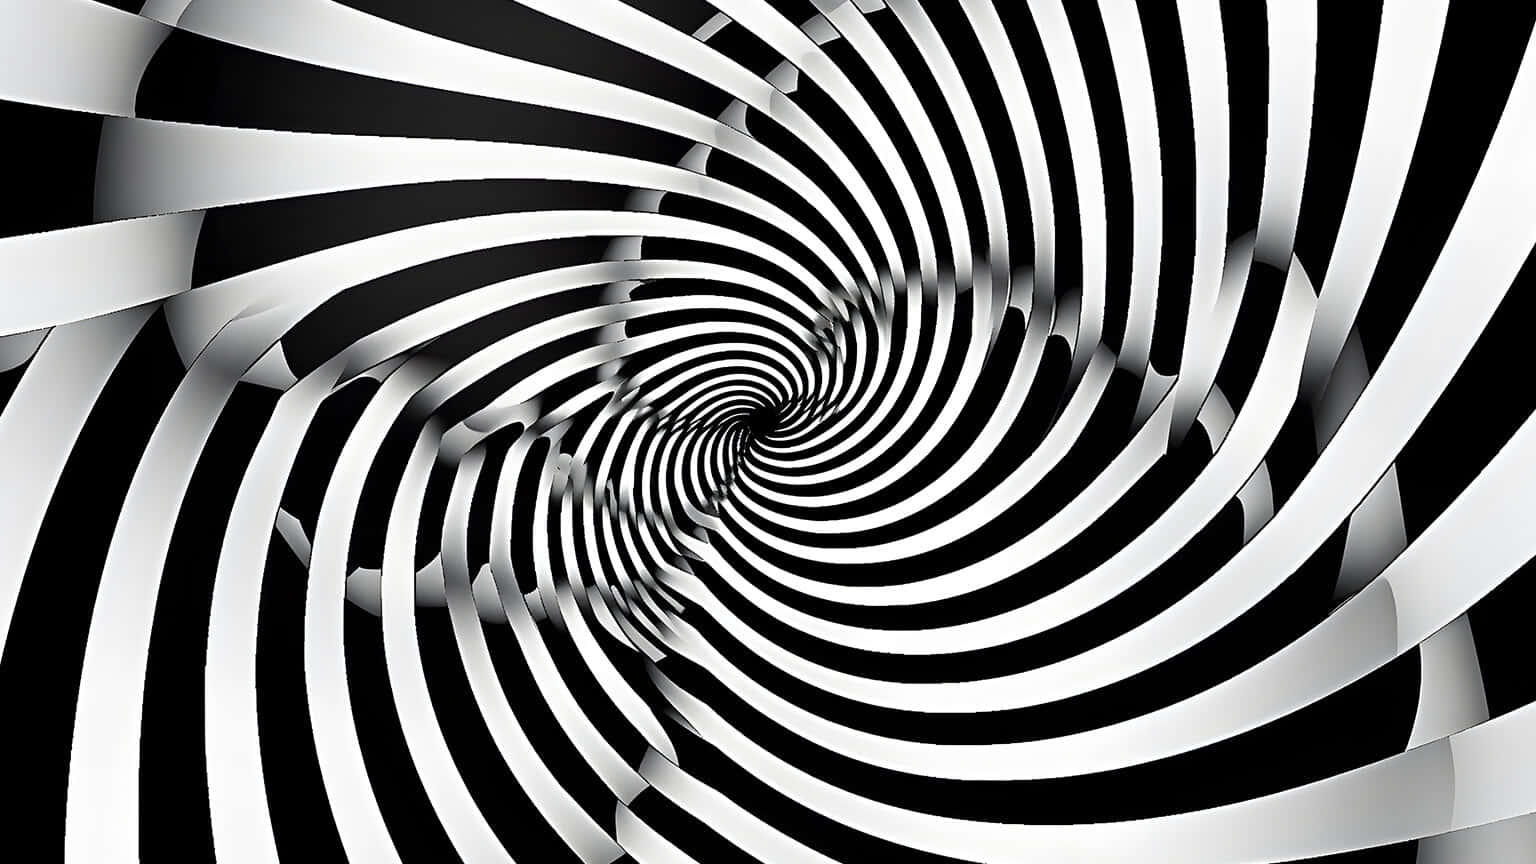 Hypnotic Black White Spiral Wallpaper